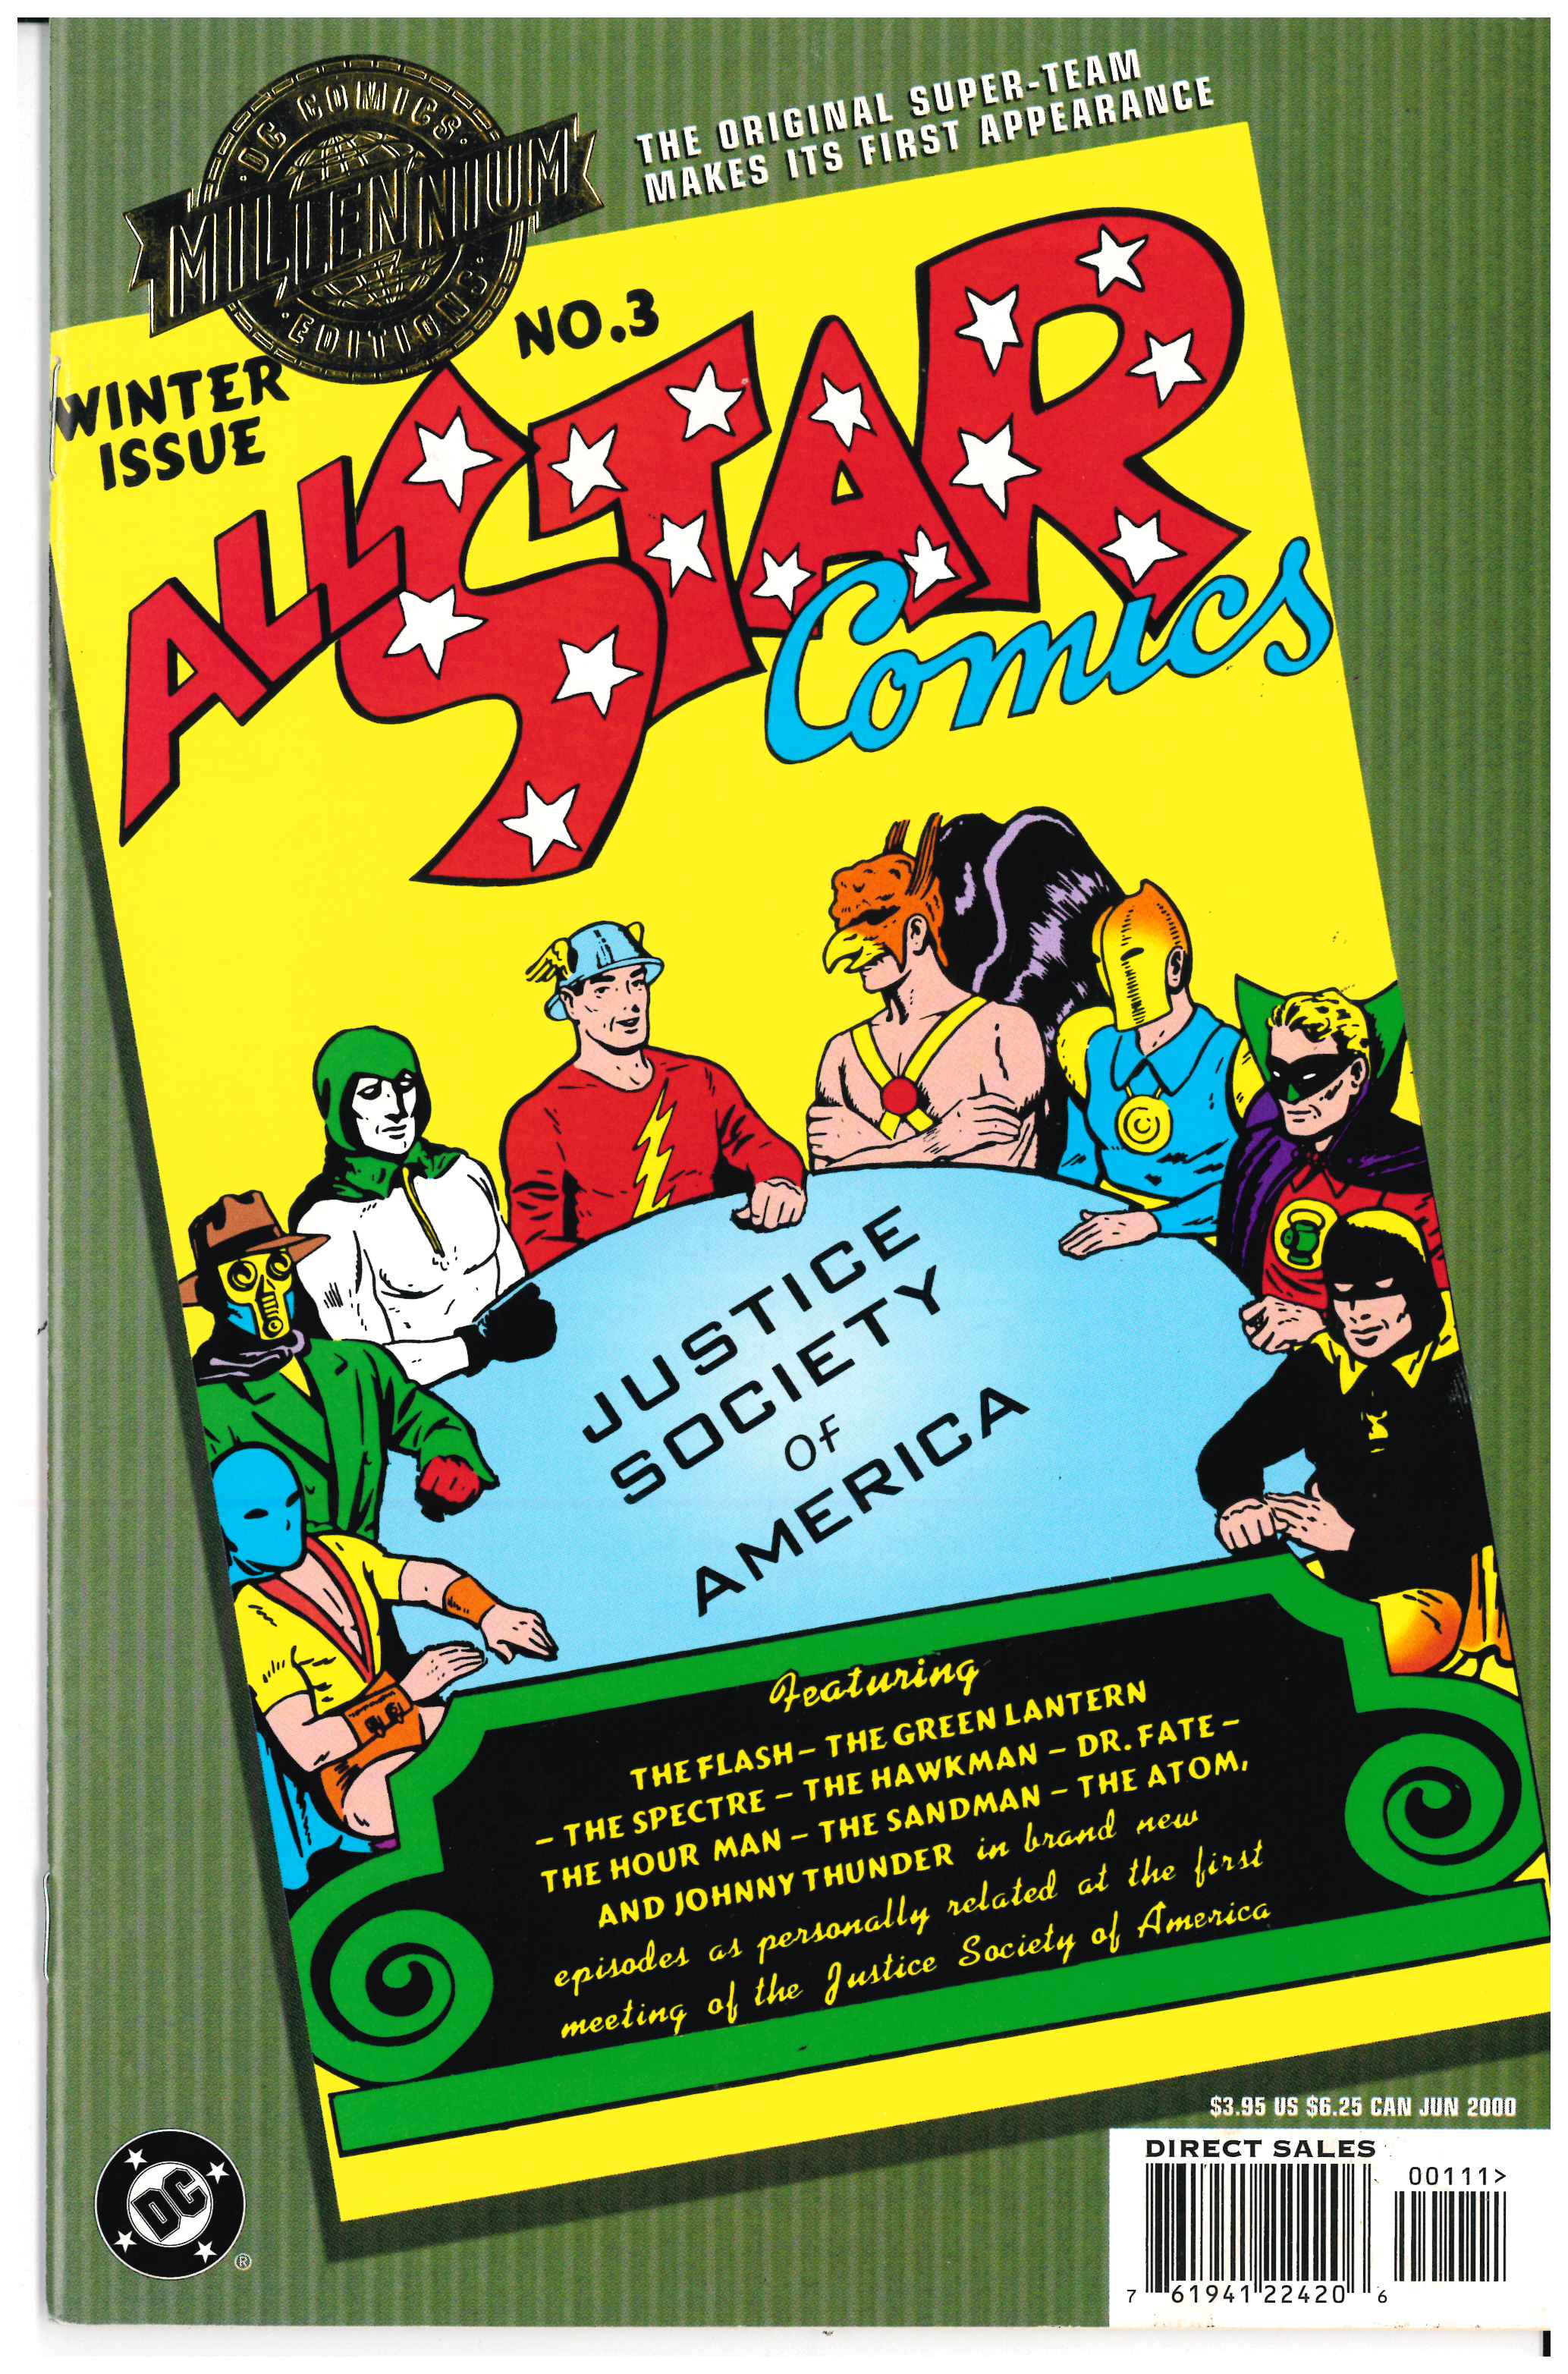 All-Star Comics #1